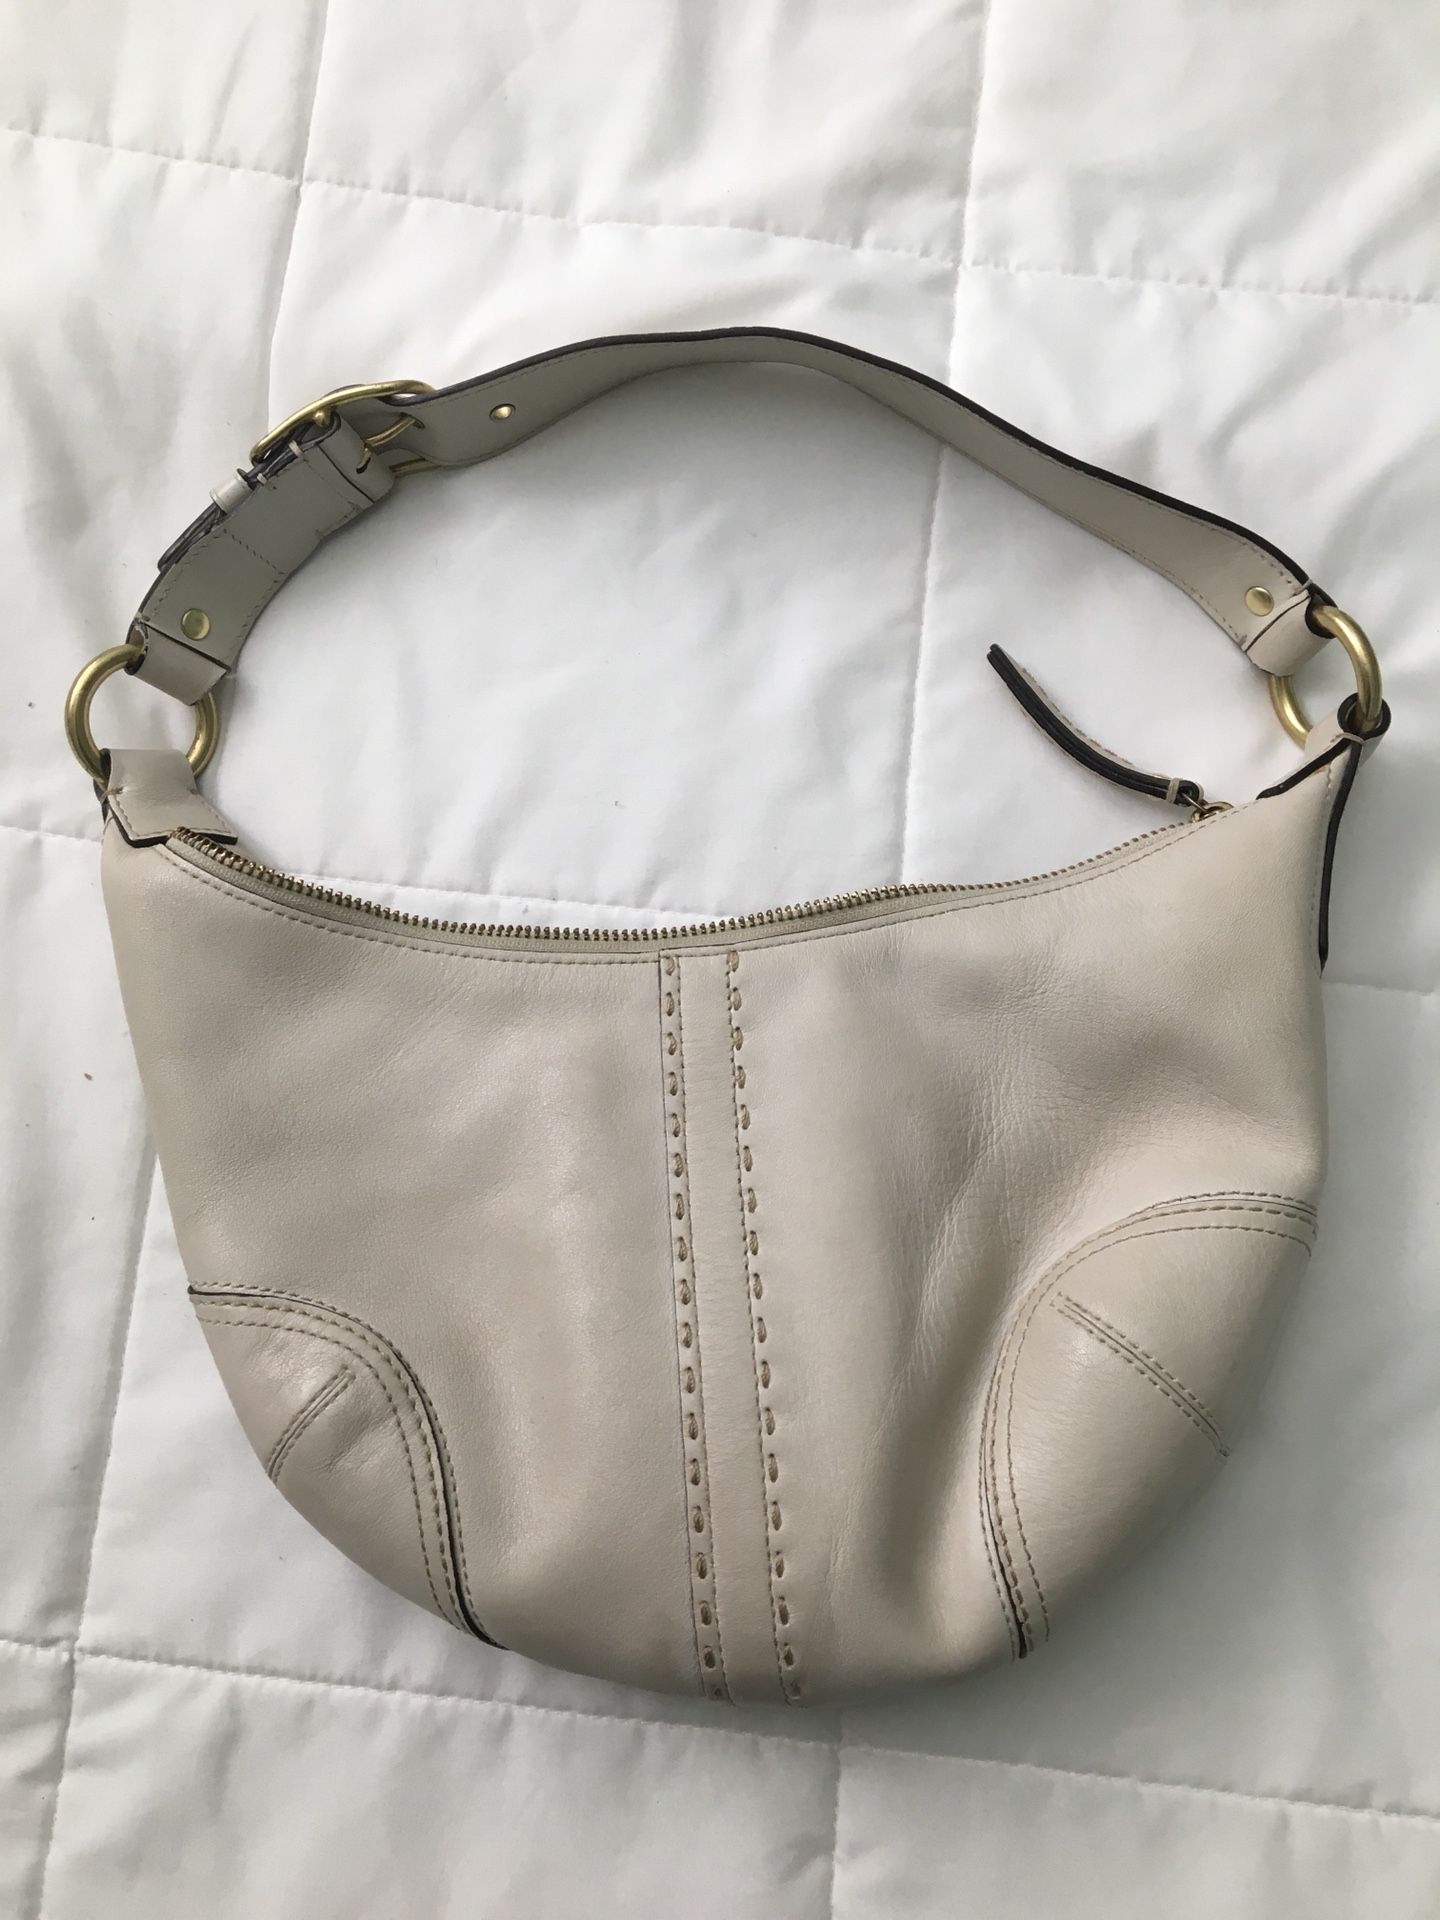 Cream Coach small leather hobo purse